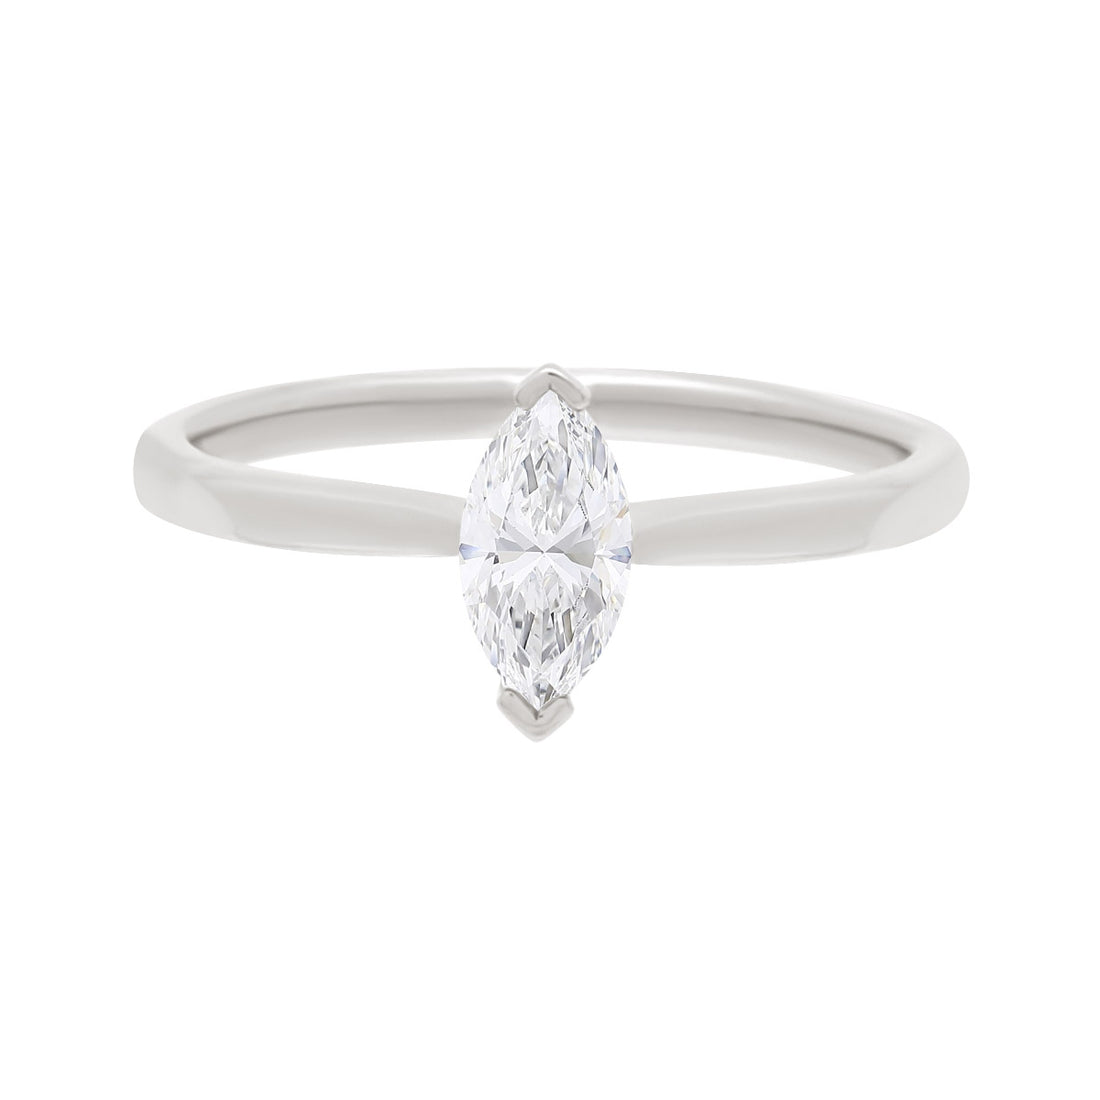 Marquise Shape diamond engagement ring in platinum